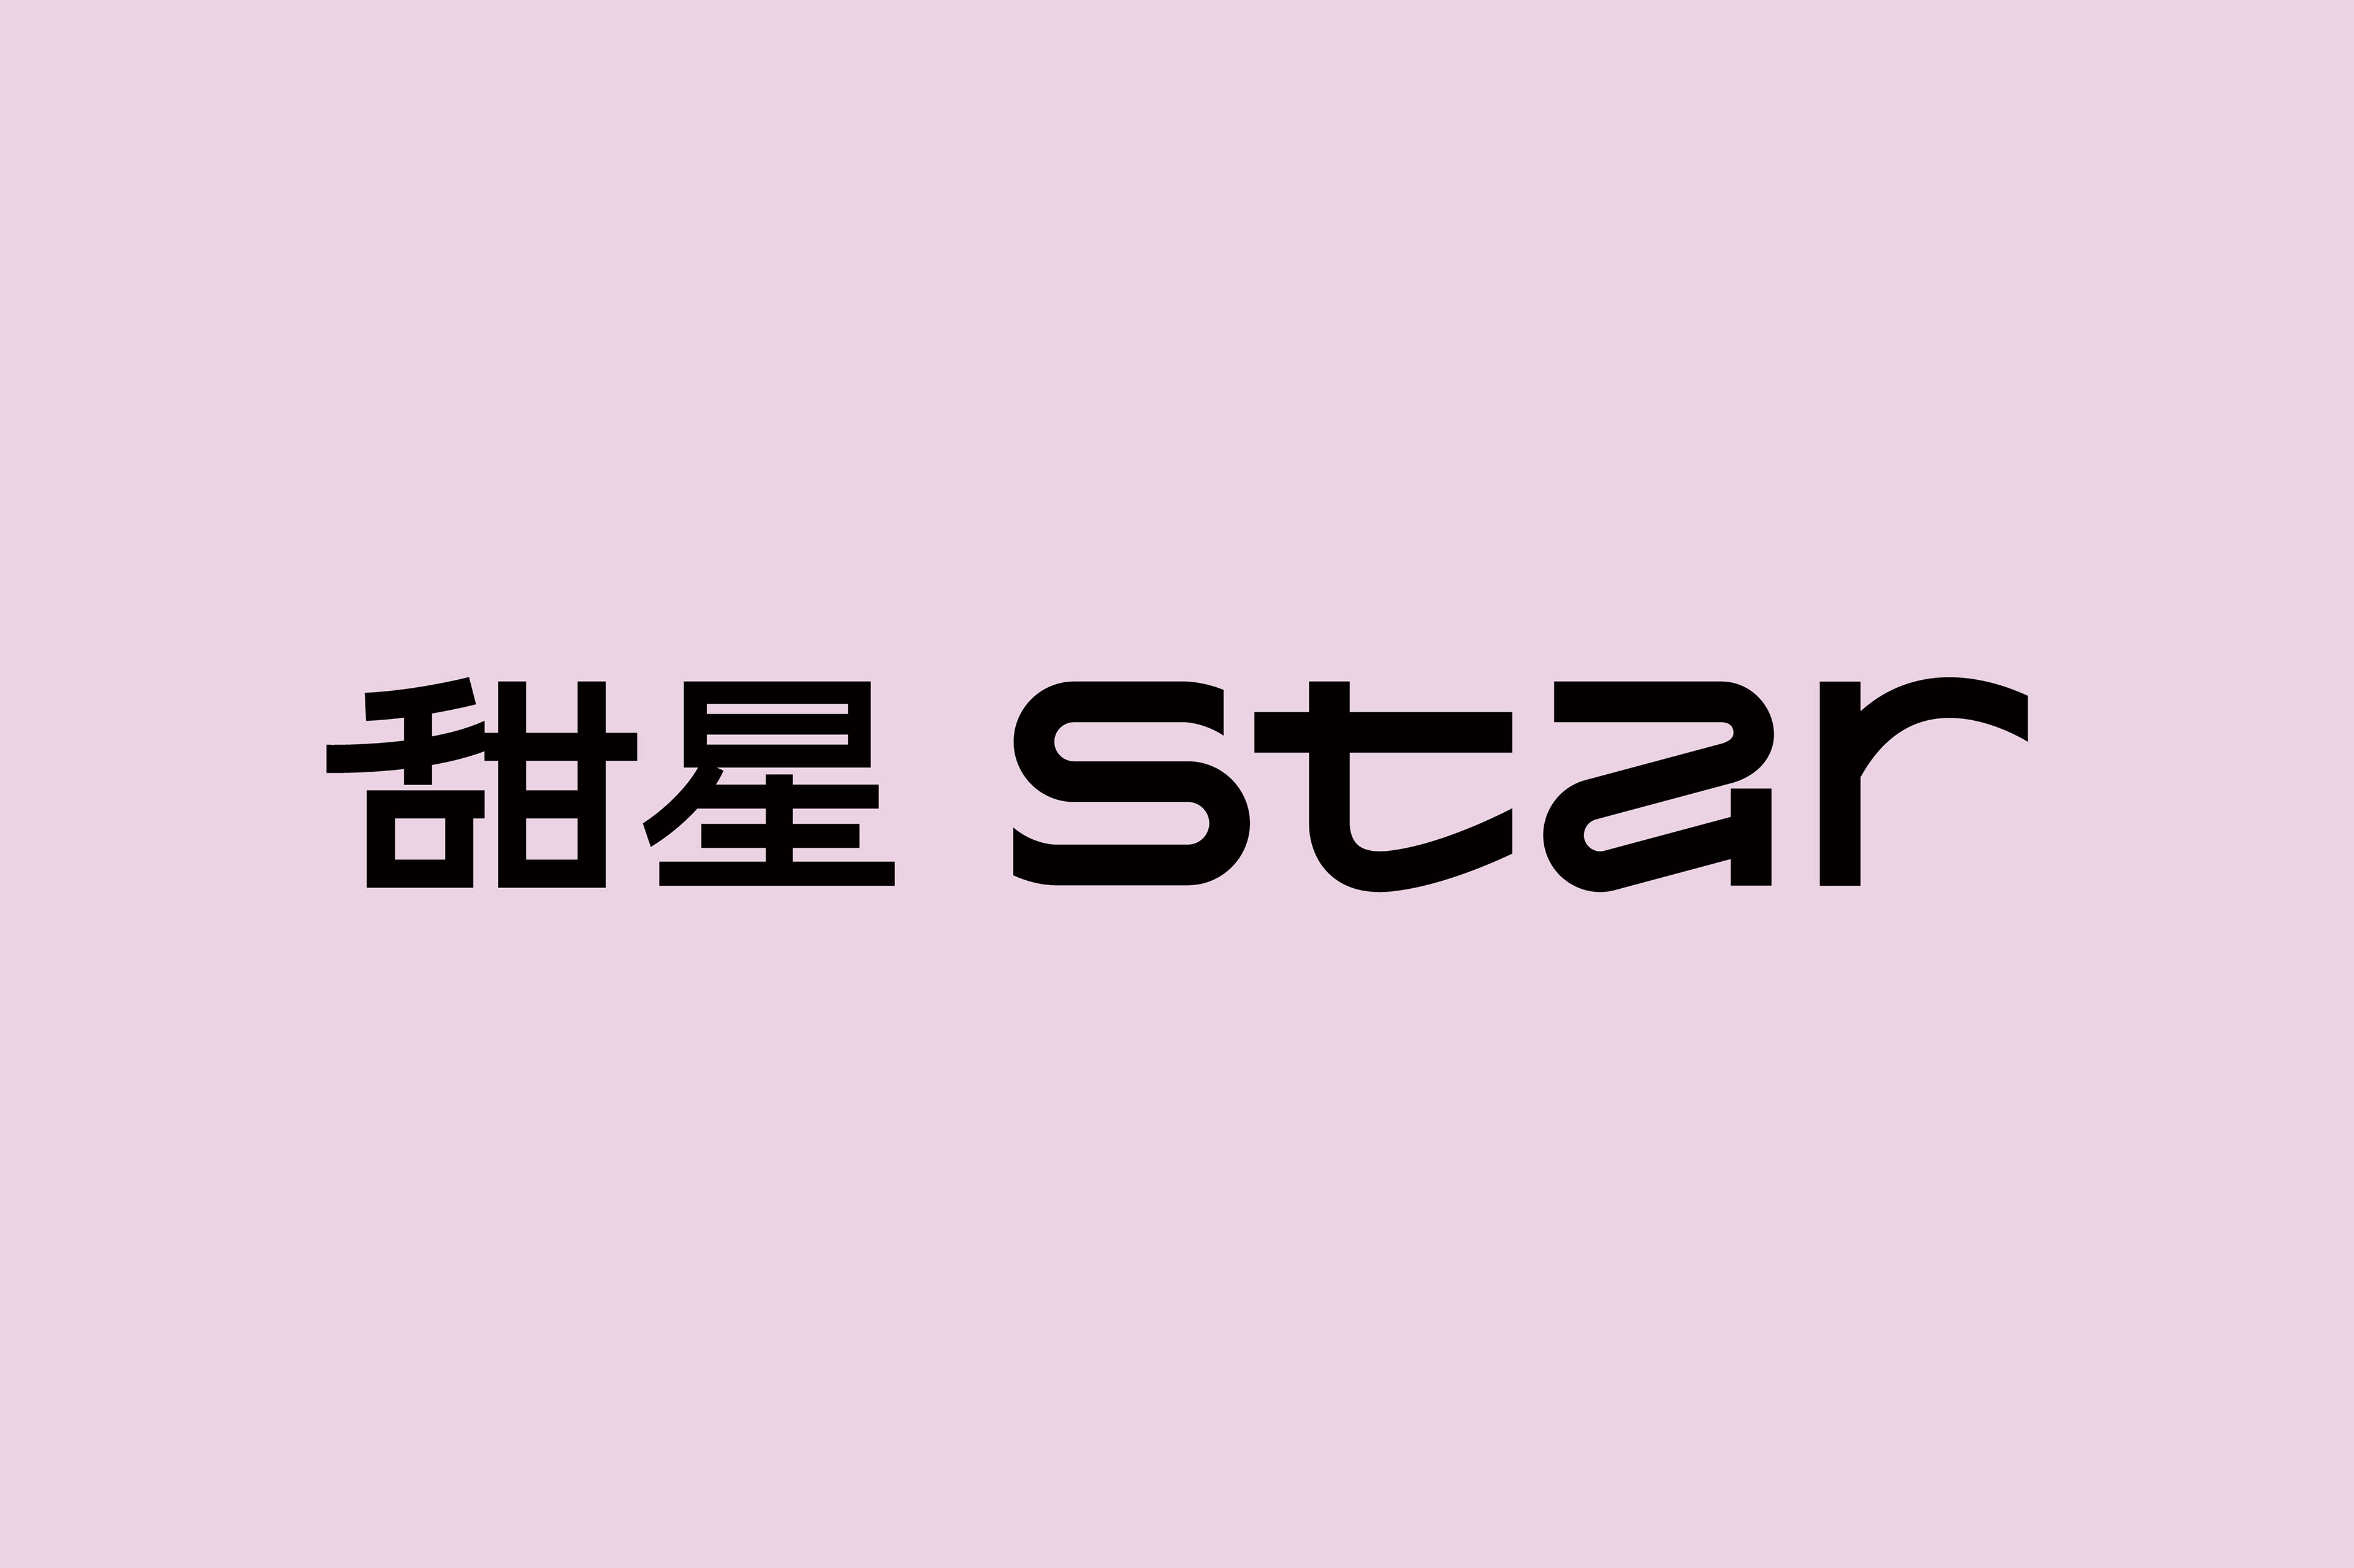 甜星Star ｜ brand identity &packaging :: Behance